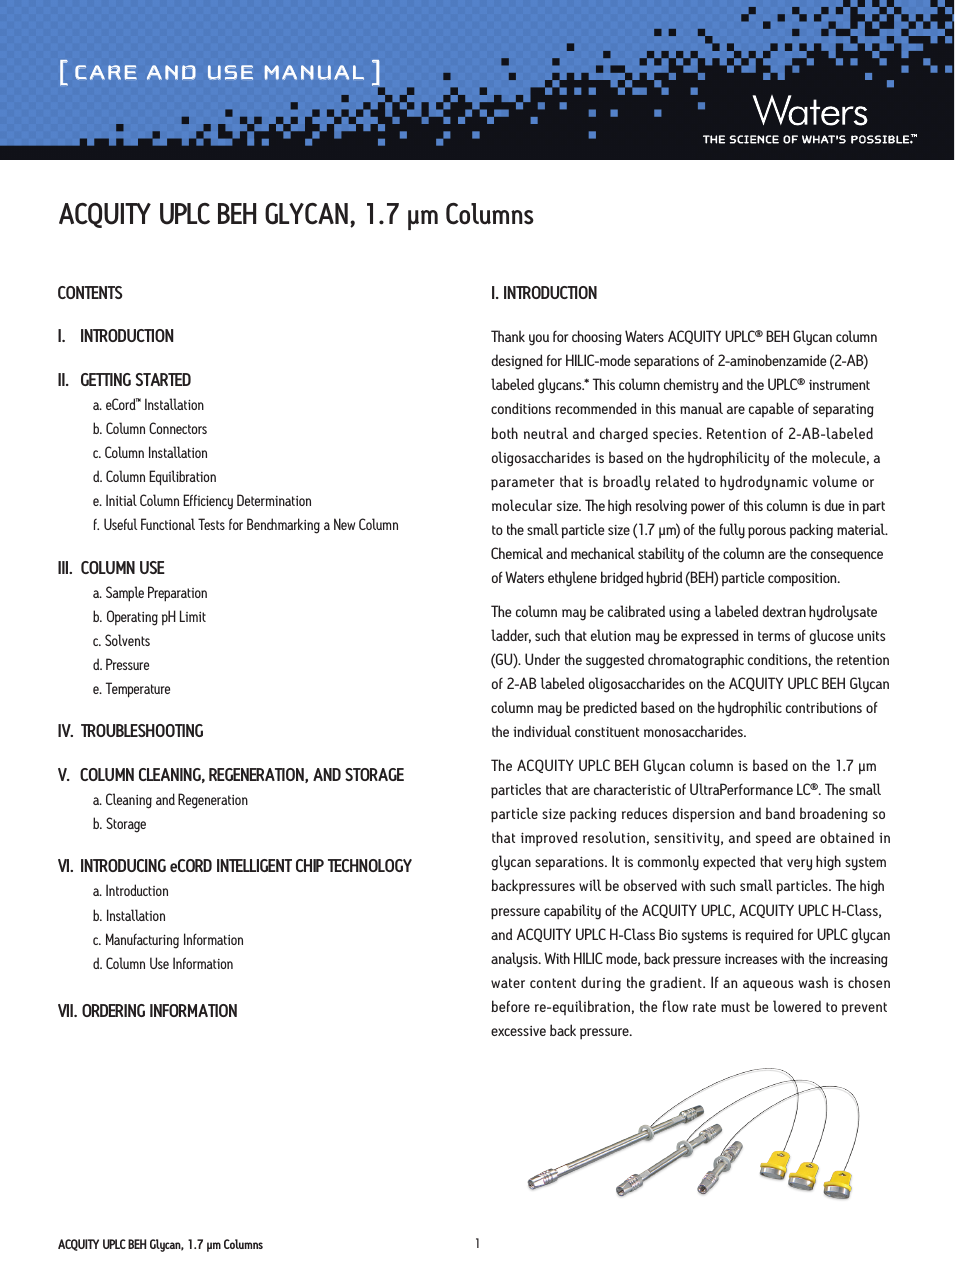 ACQUITY UPLC BEH Glycan, 1.7 µm Columns, Glycan Performance Test Standard